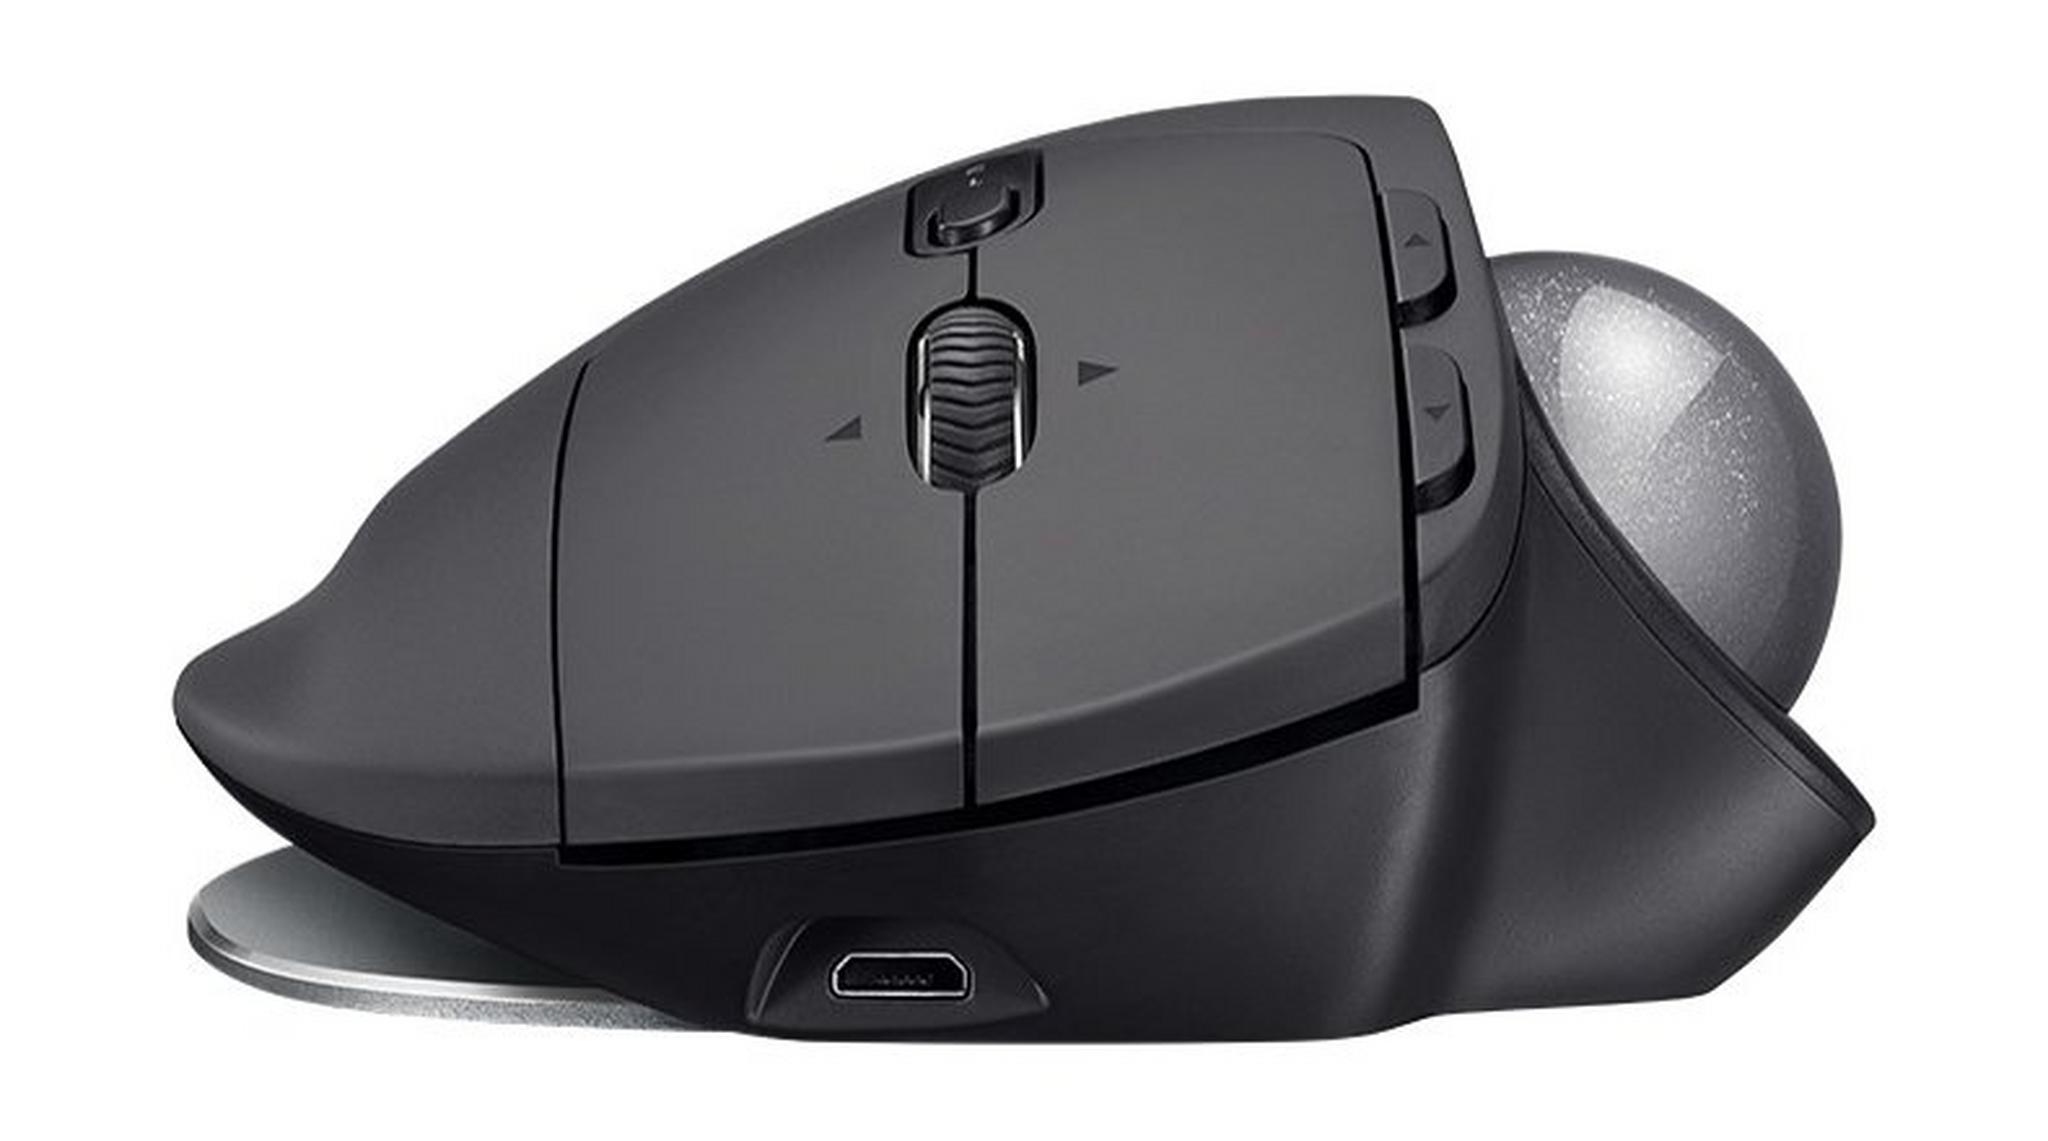 Logitech MX ERGO Wireless Mouse (910-005179) - Graphite